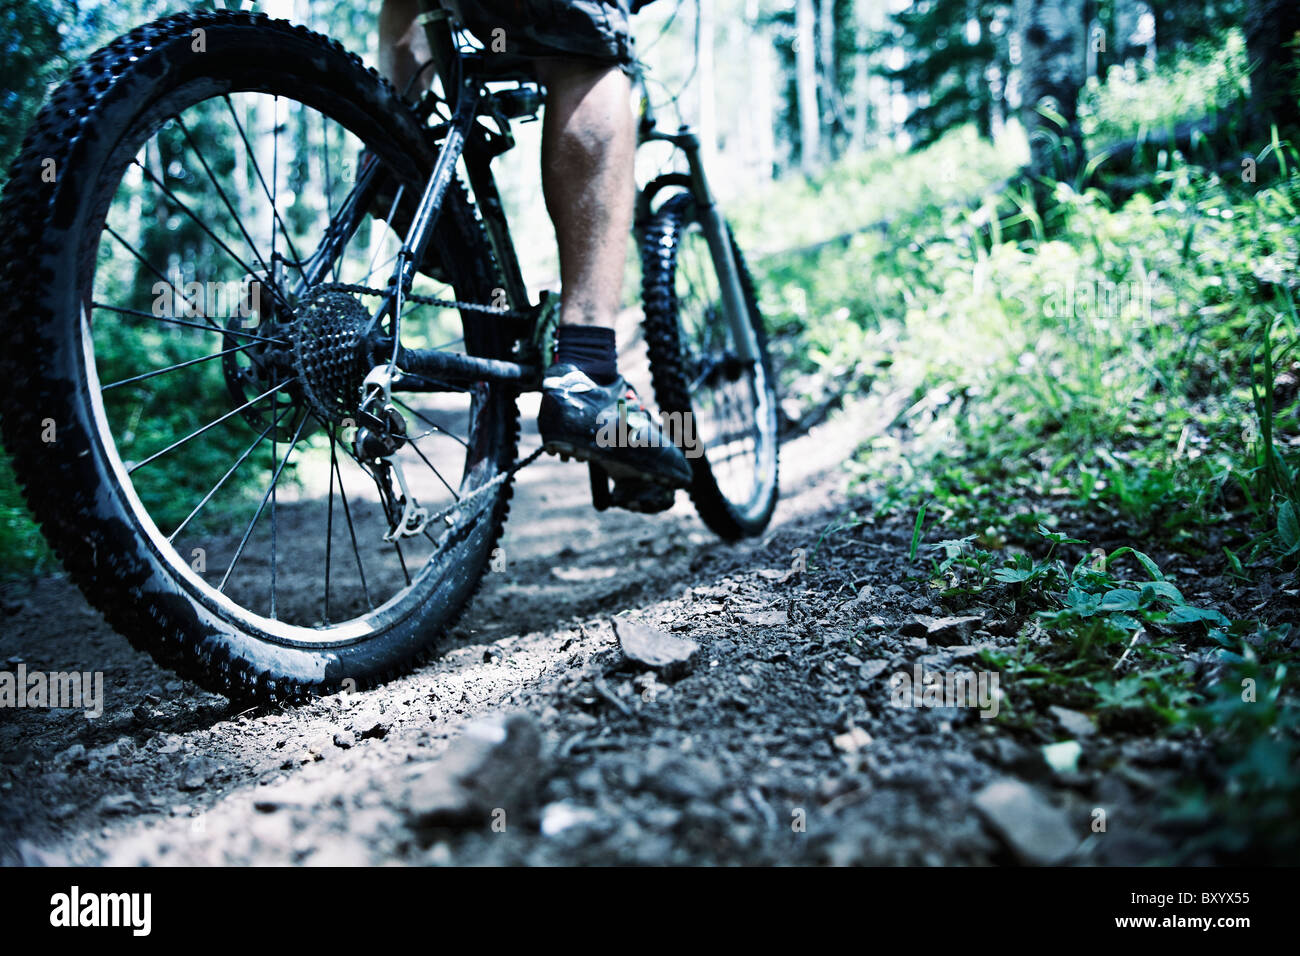 Man mountain biking in forest Stock Photo